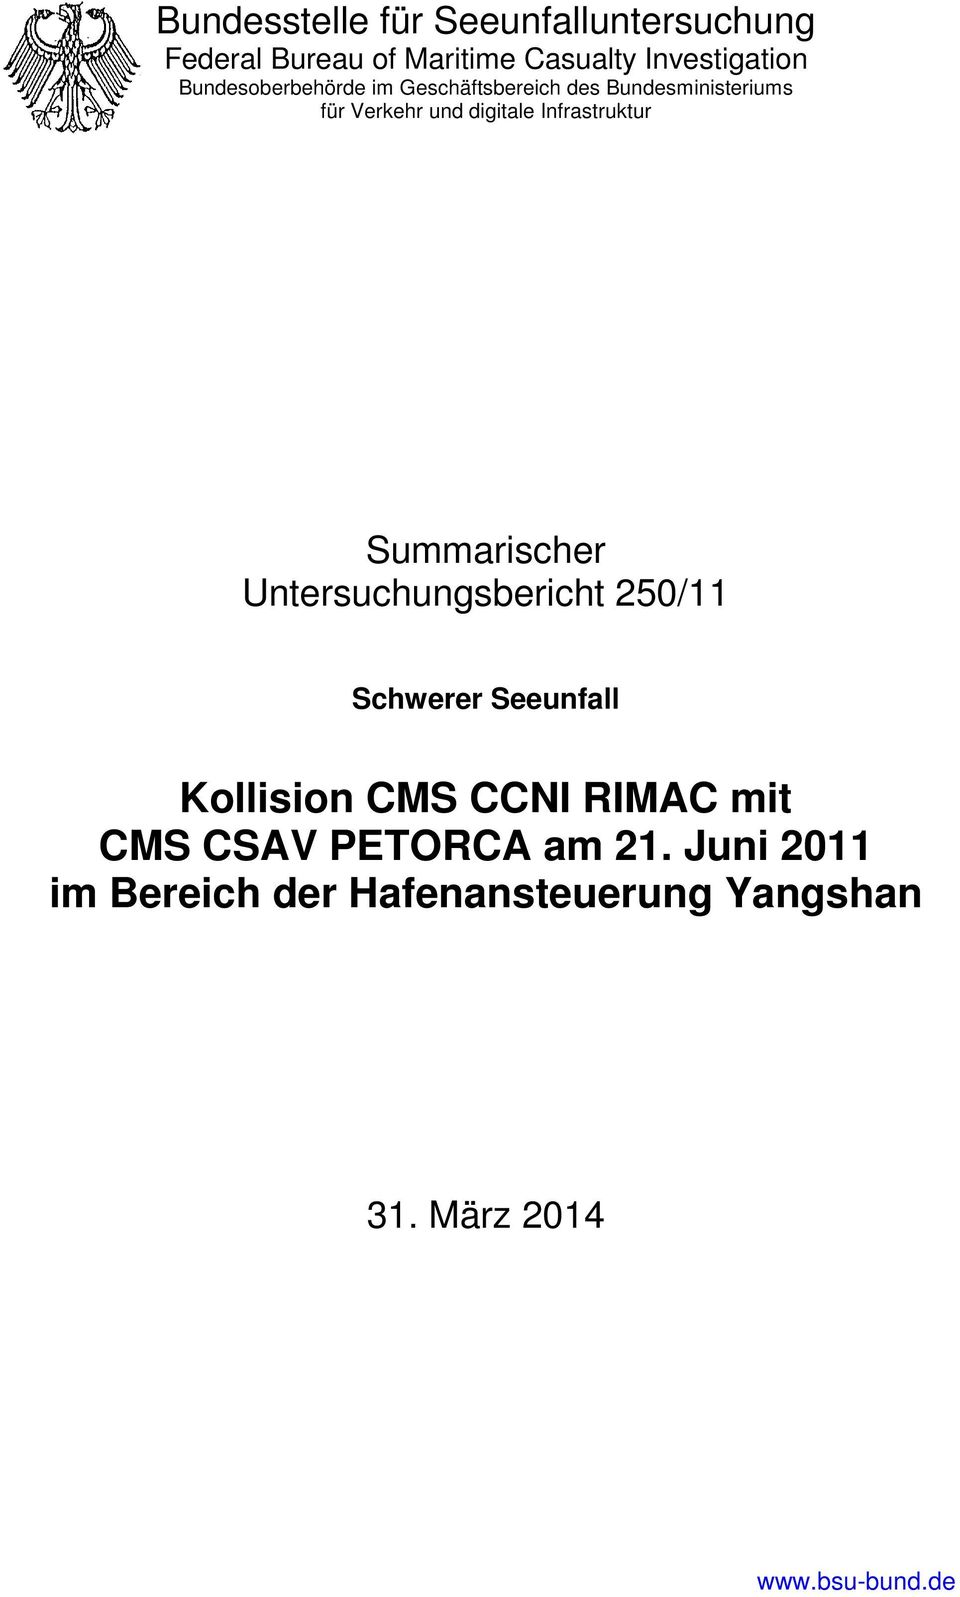 Schwerer Seeunfall Kollision CMS CCNI RIMAC mit CMS CSAV PETORCA am 21.